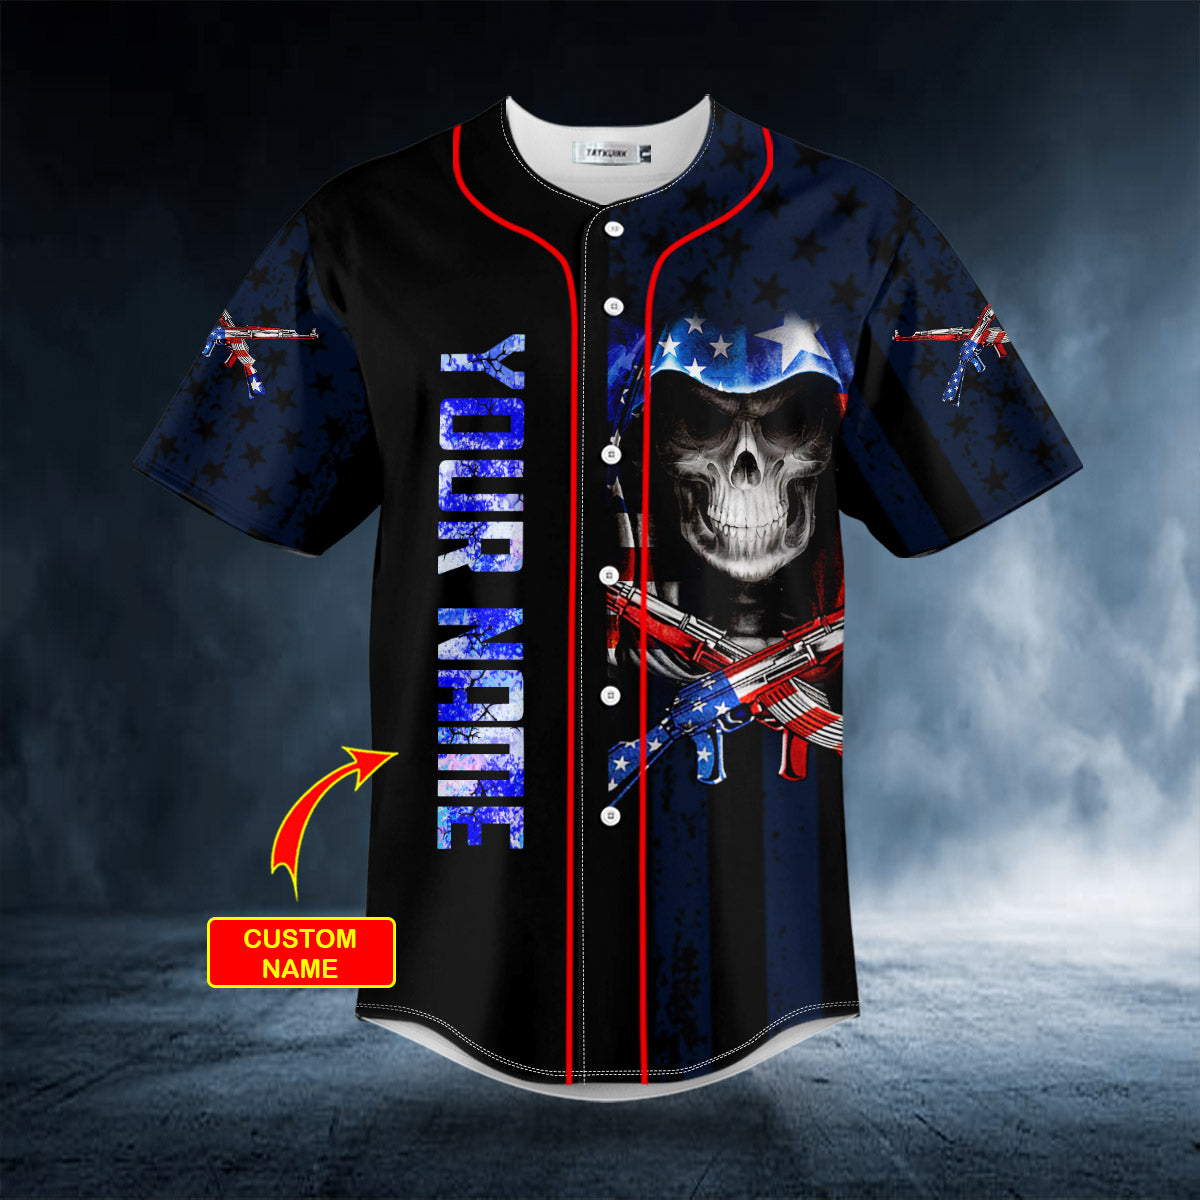 patriotism offends you american flag grim reaper skull custom baseball jersey bsj 688 qjqil